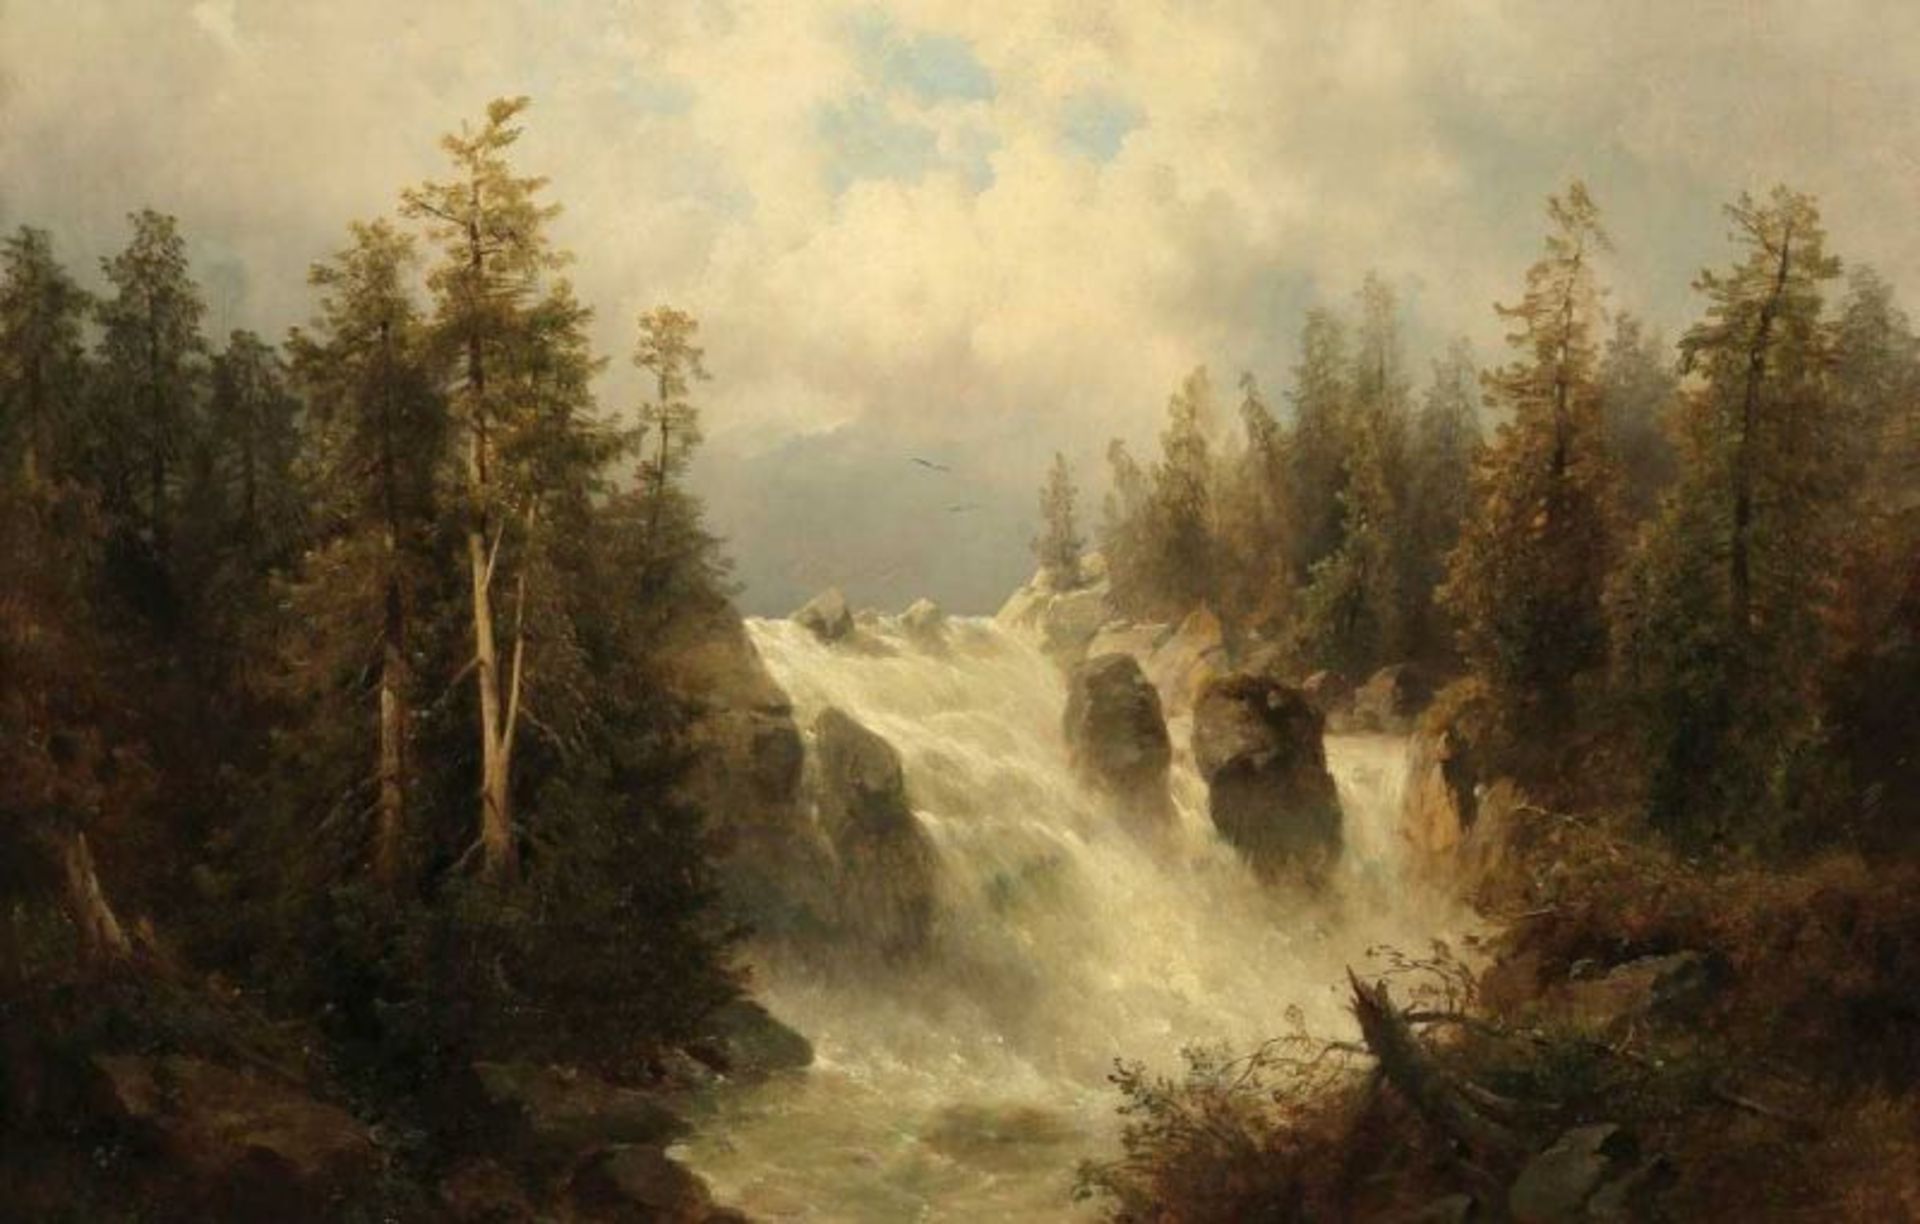 Josef Thoma 1828 Wien - 1899 Wien - "Norwegischer Wasserfall" - Öl/Lwd. 69 x 105,5 cm. Sign. r.